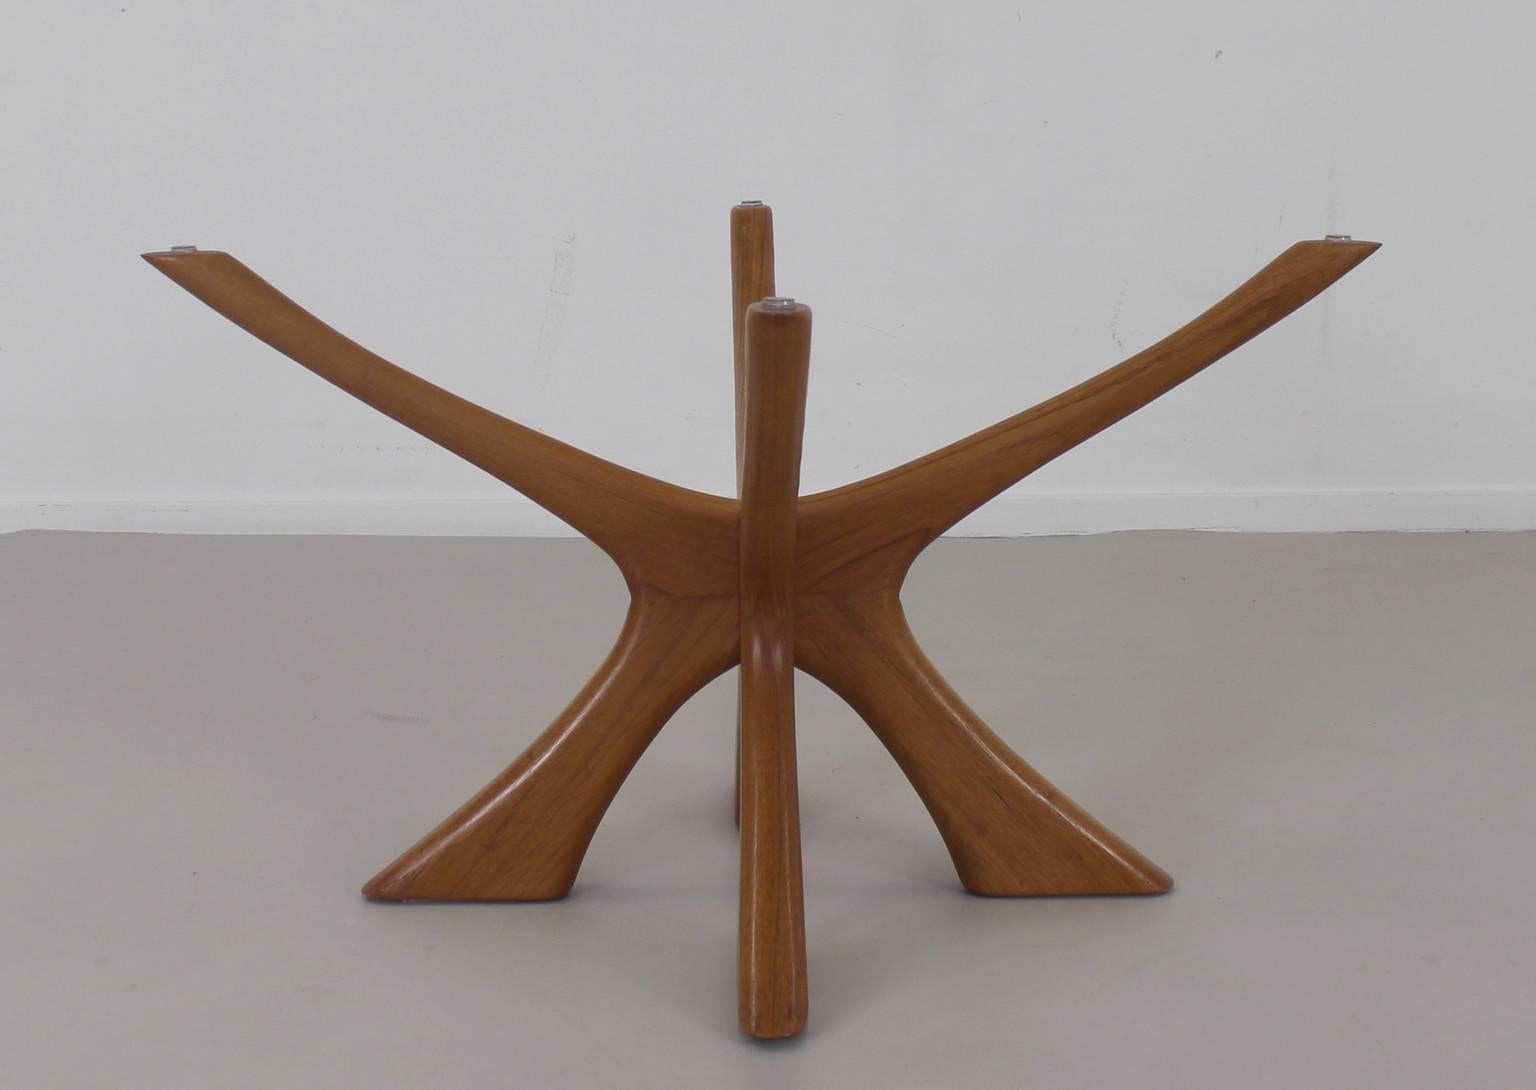 Spider table of the 1960s
Designer: Illum Wikkelsø.
Manufacturer: Søren Willadsen. 
Thick glass top.
Walnut wooden base.